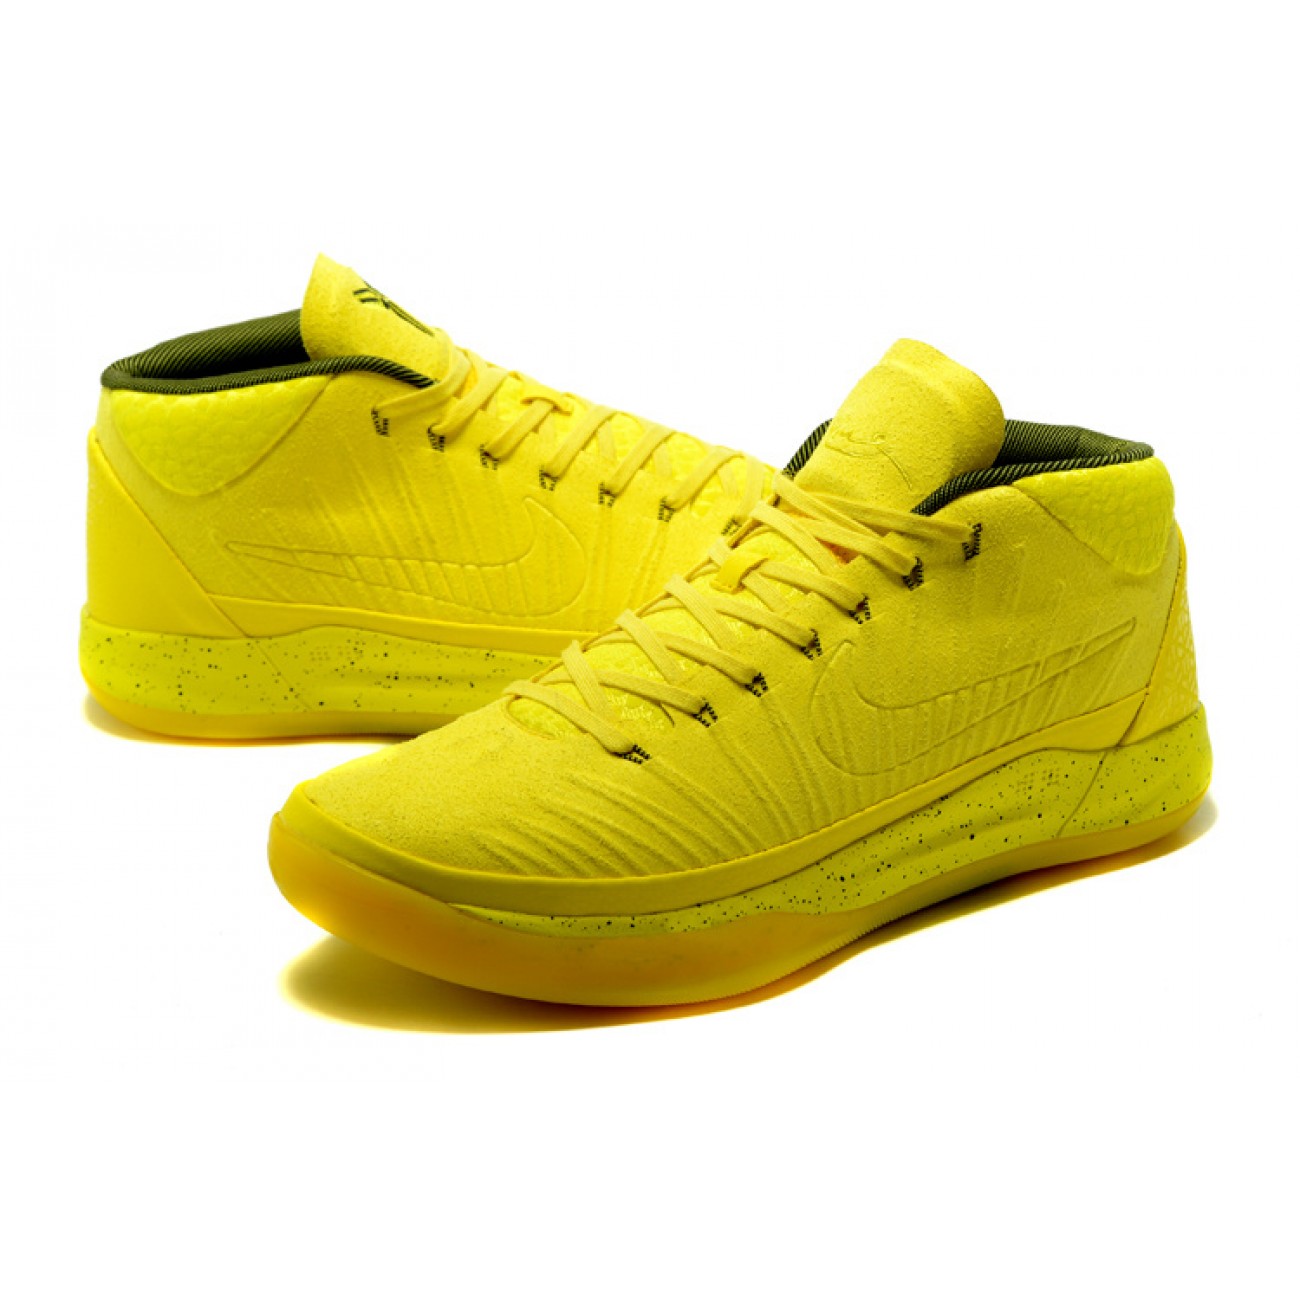 Kobe 13 AD / All Yellow